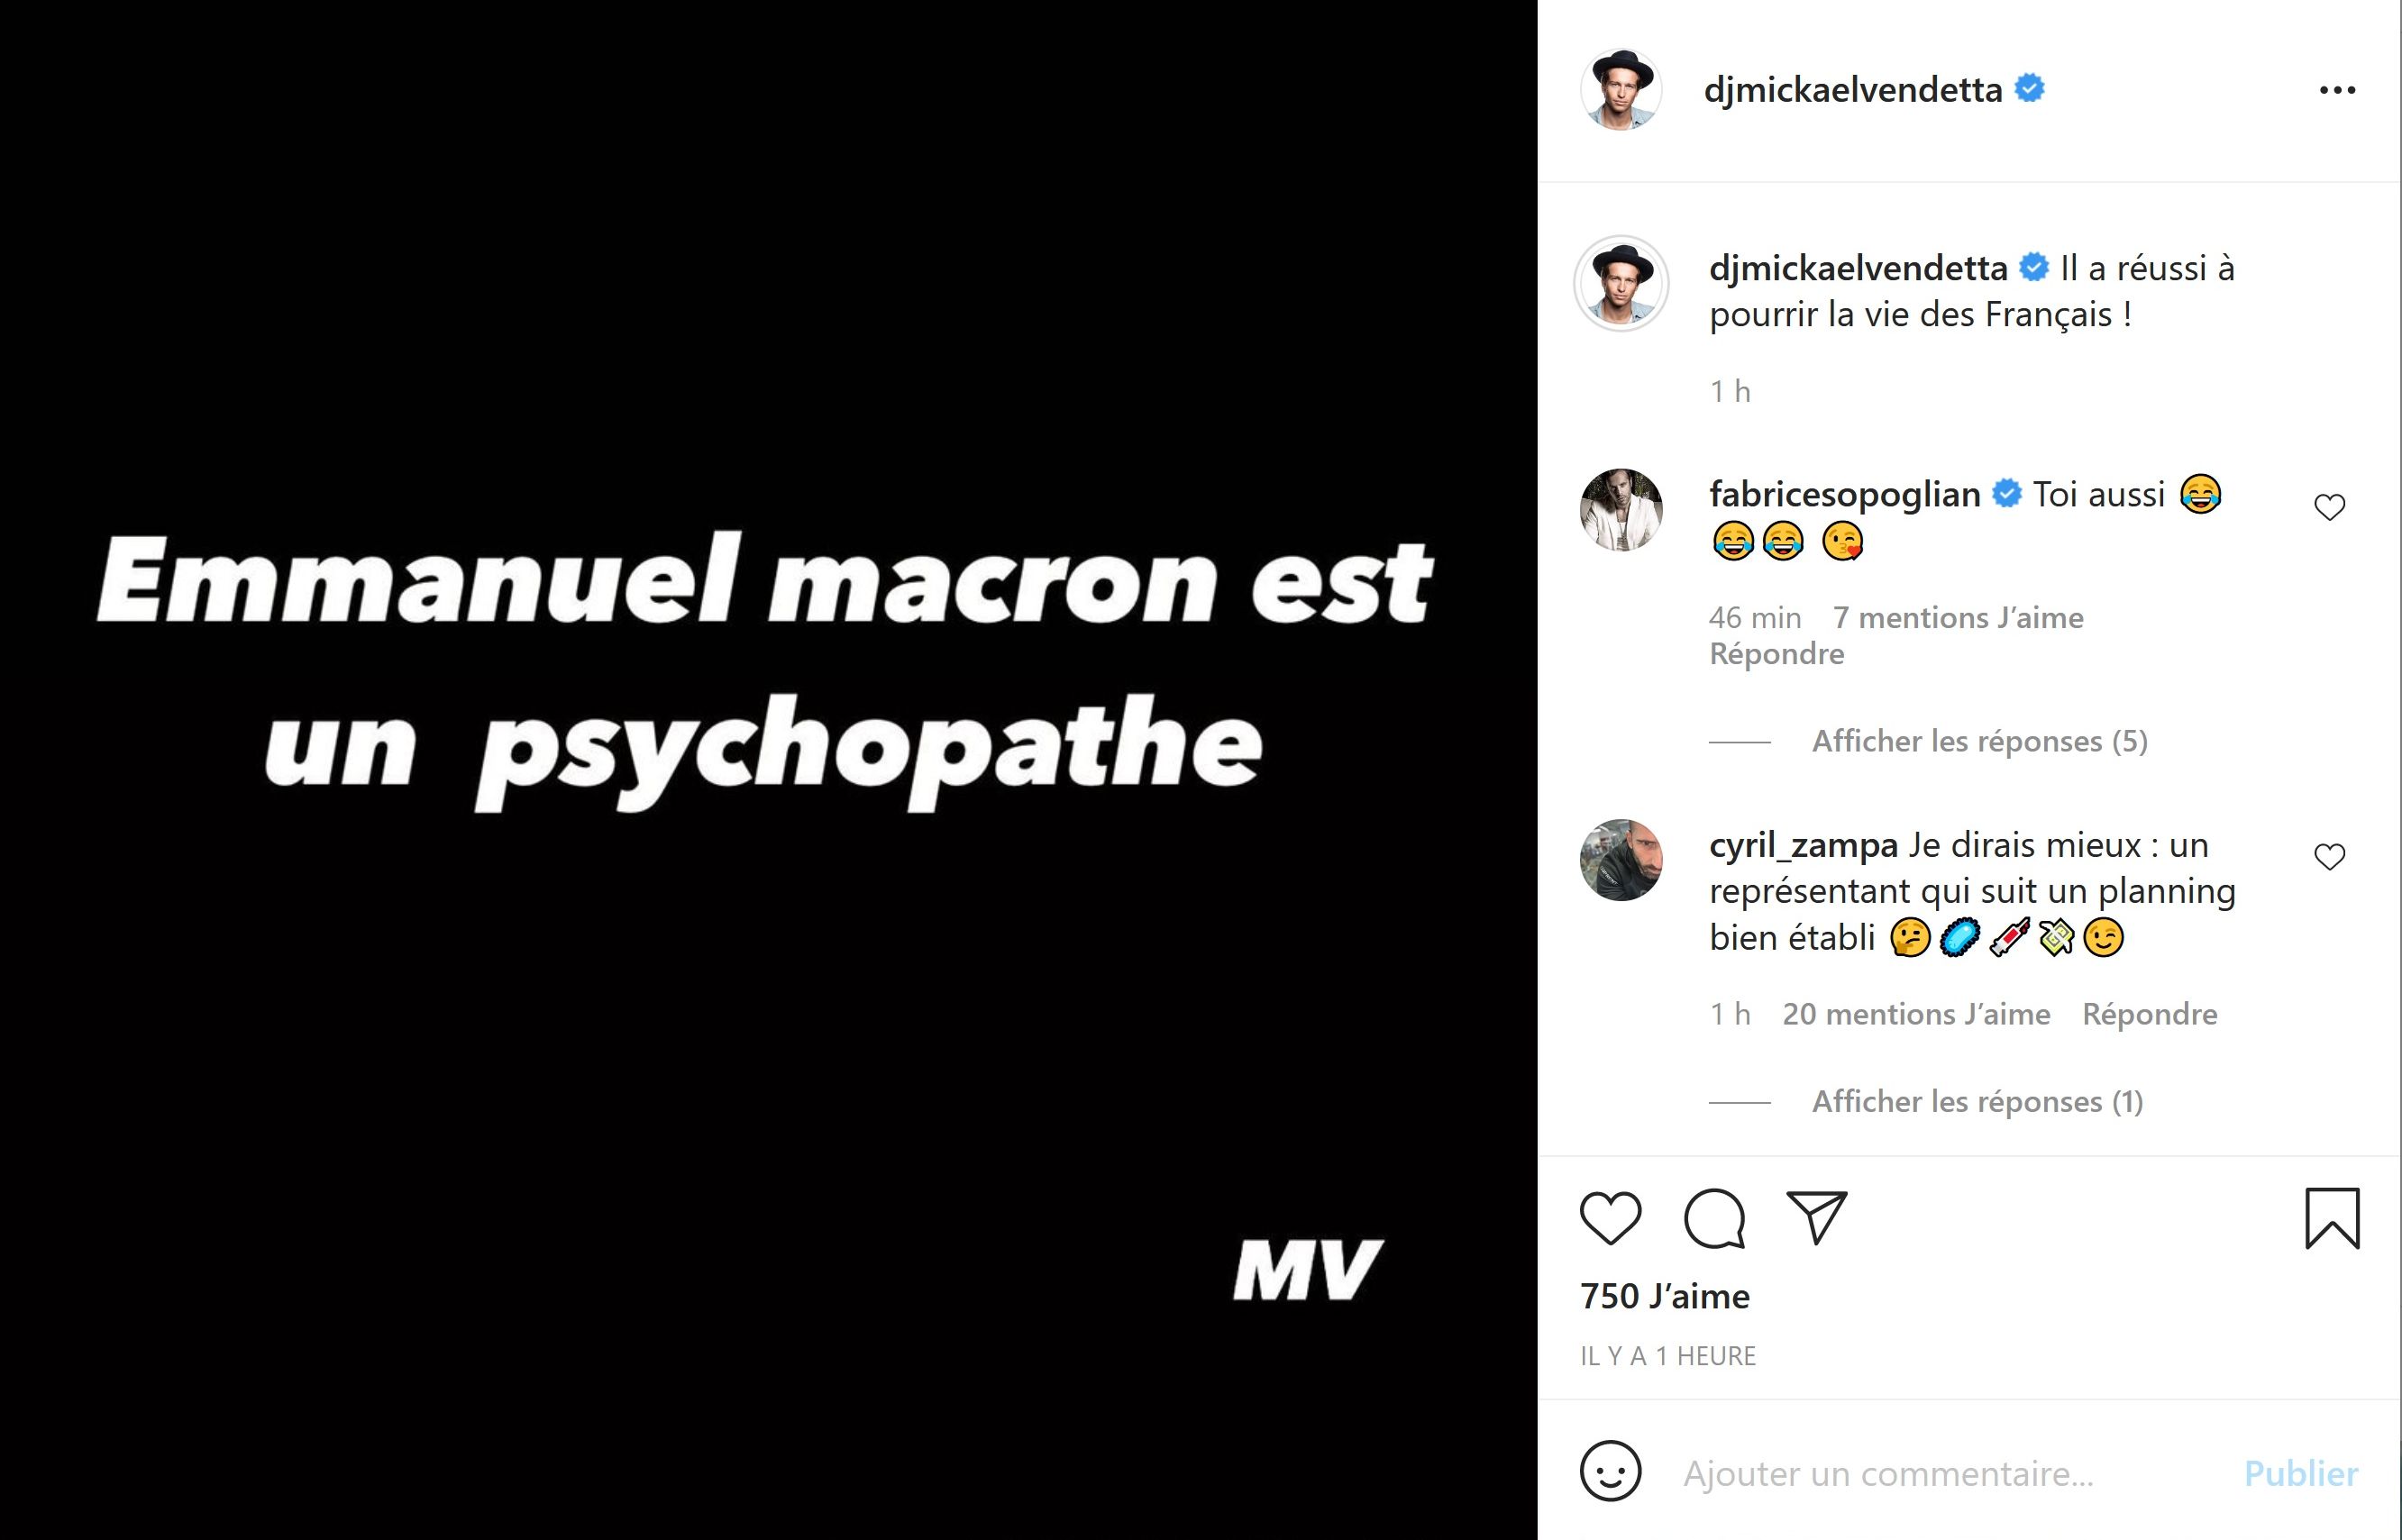 Mickaël Vendetta qualifie Emmanuel Macron de psychopathe, Fabrice Sopoglian intervient !